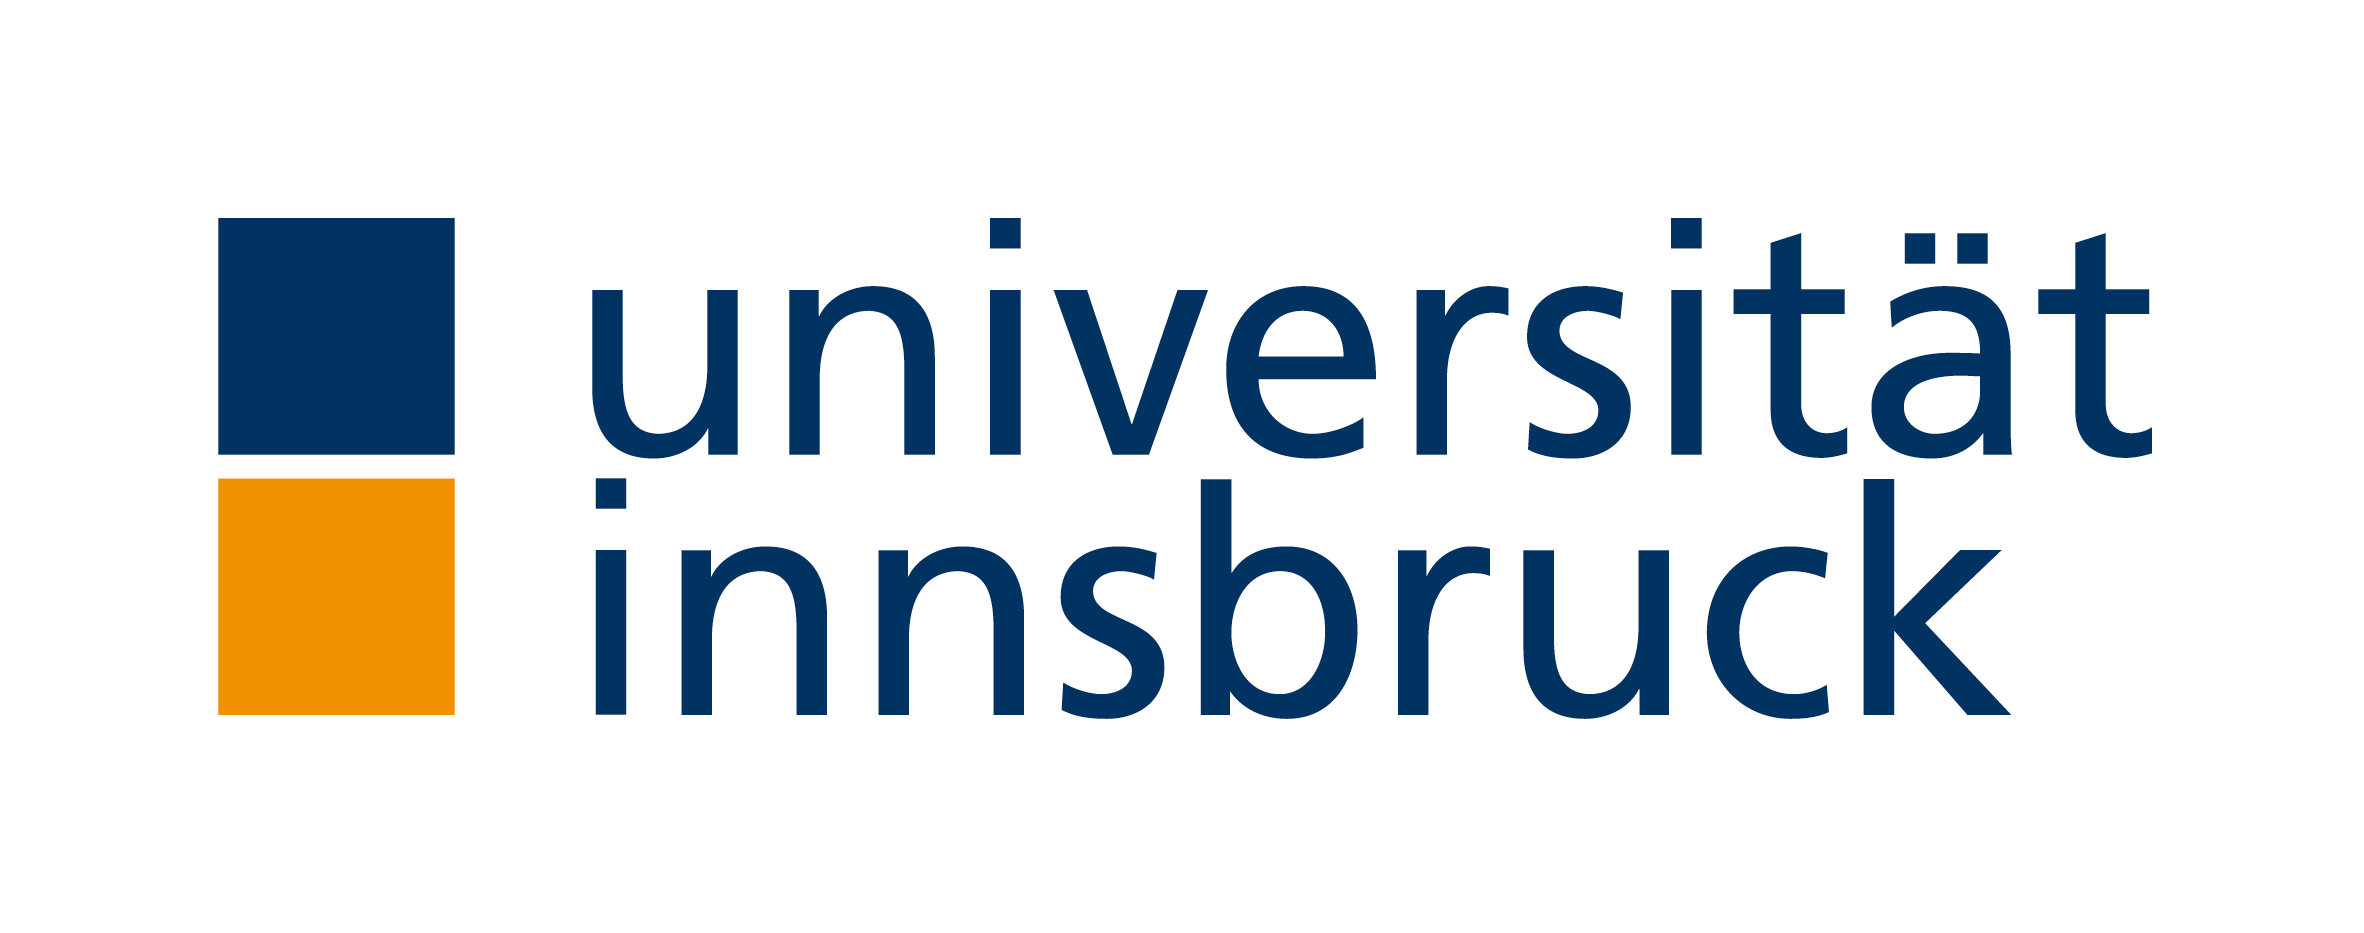 University of Innsbruck - Wikipedia